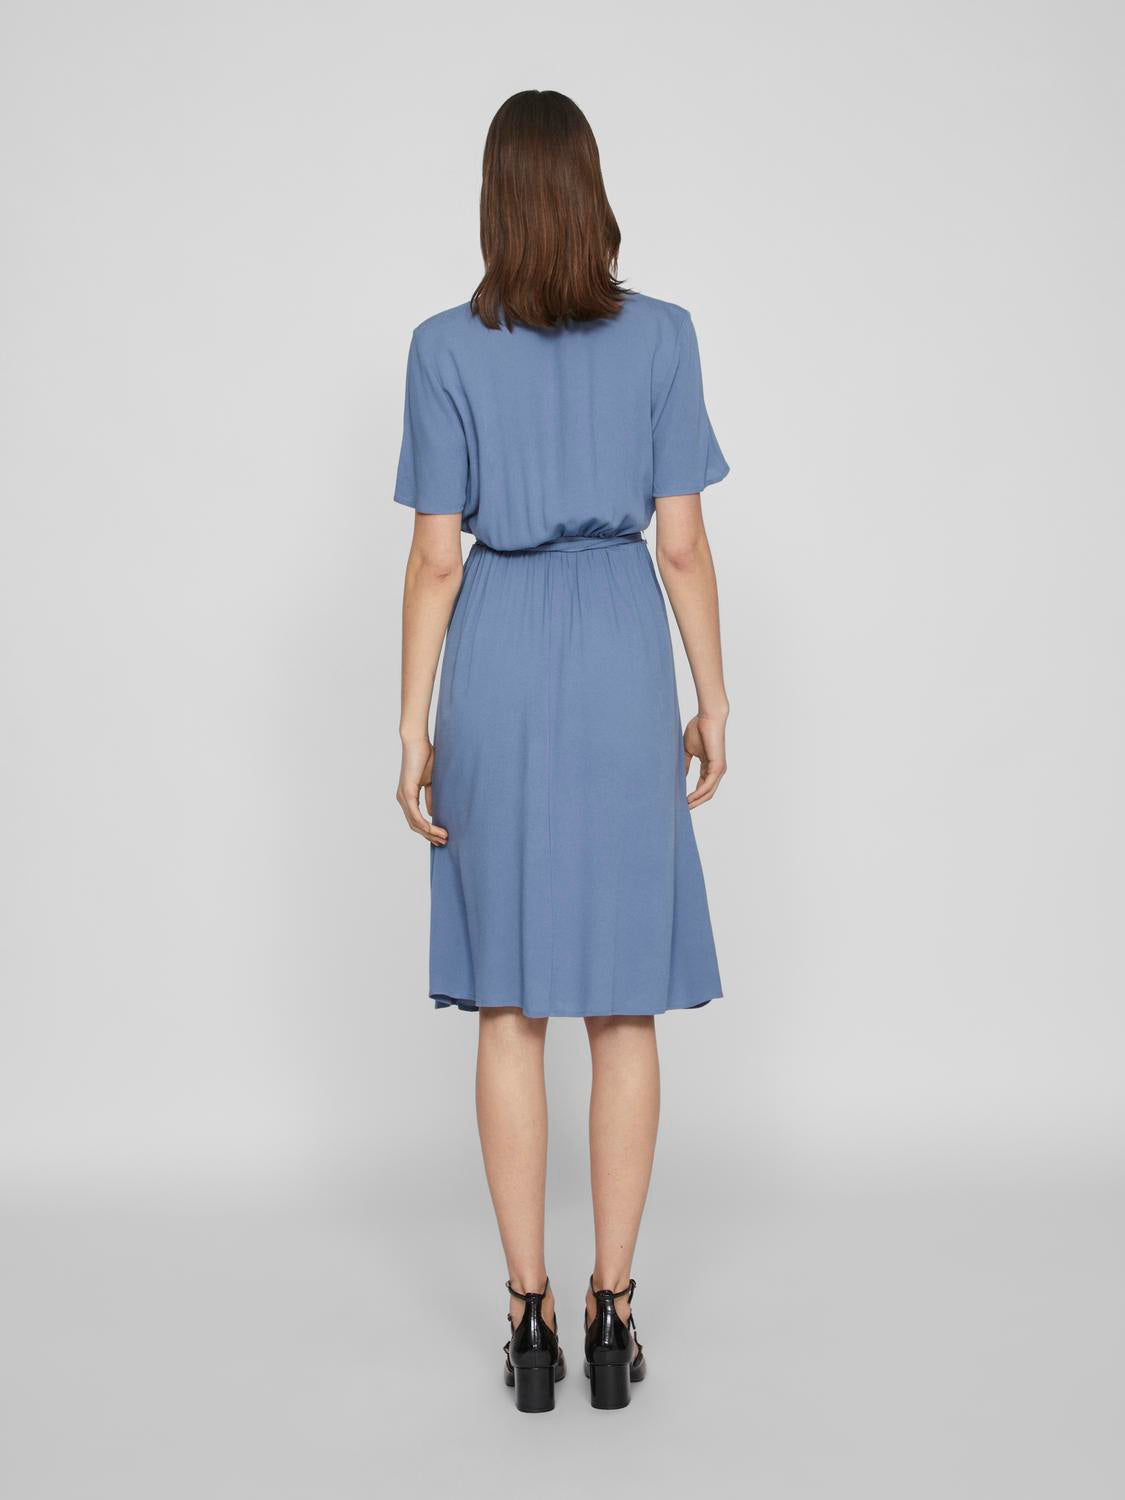 VIMOASHLY Dress - Coronet Blue